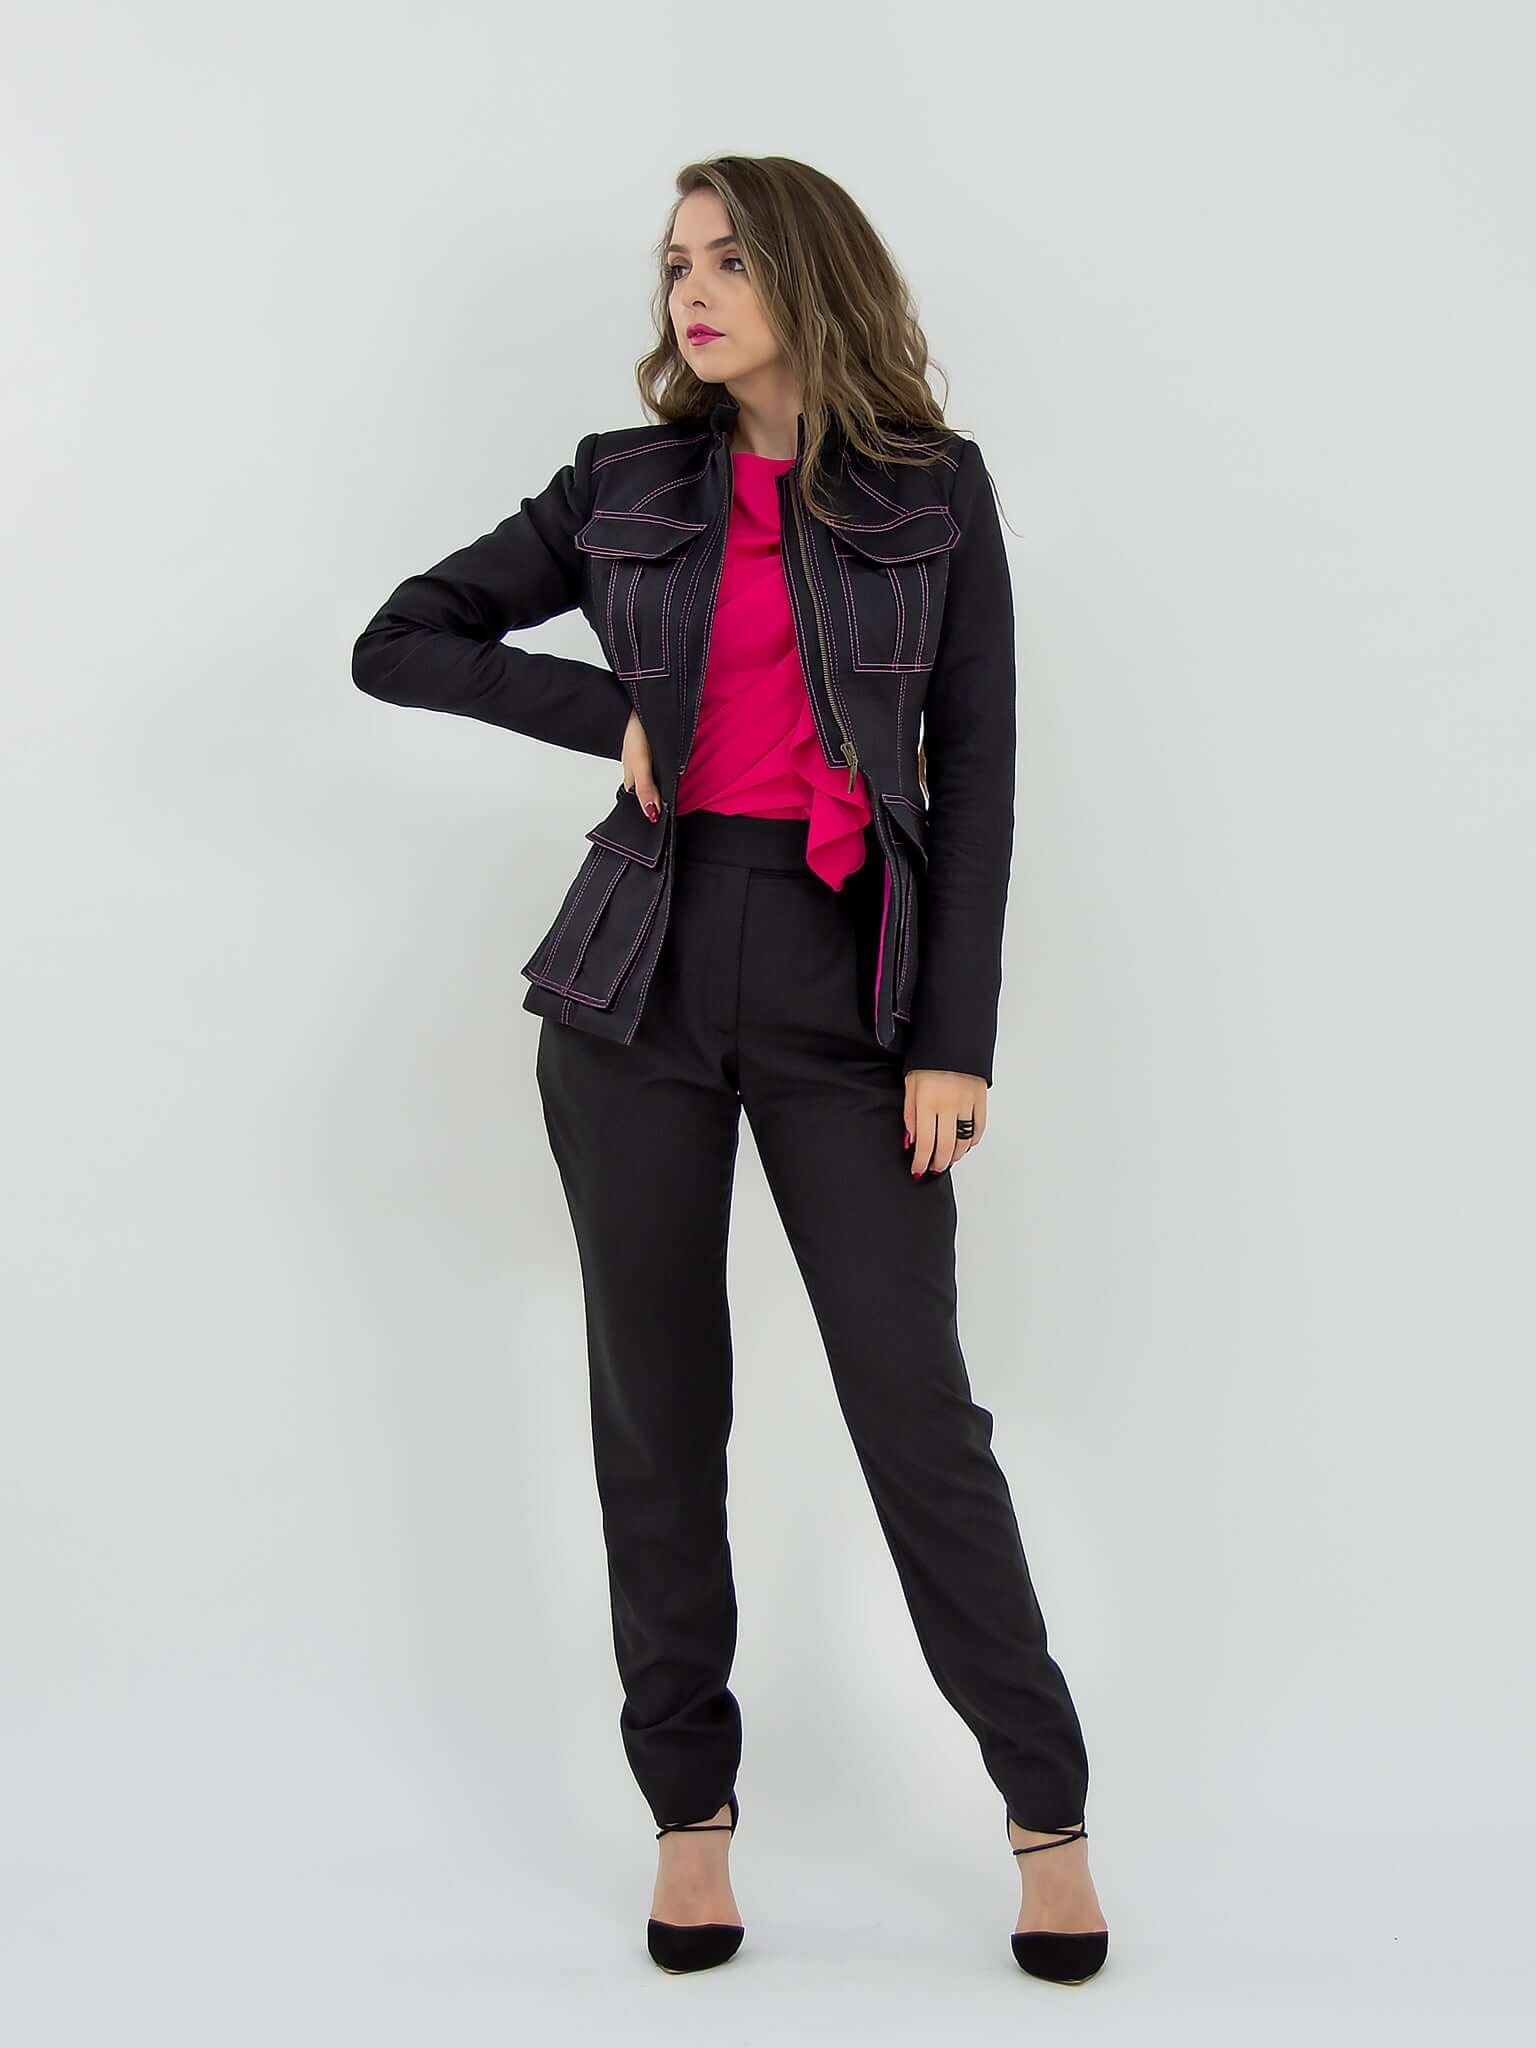 Details Matter Tailored Jacket - Black & Pink by Tia Dorraine Women's Luxury Fashion Designer Clothing Brand